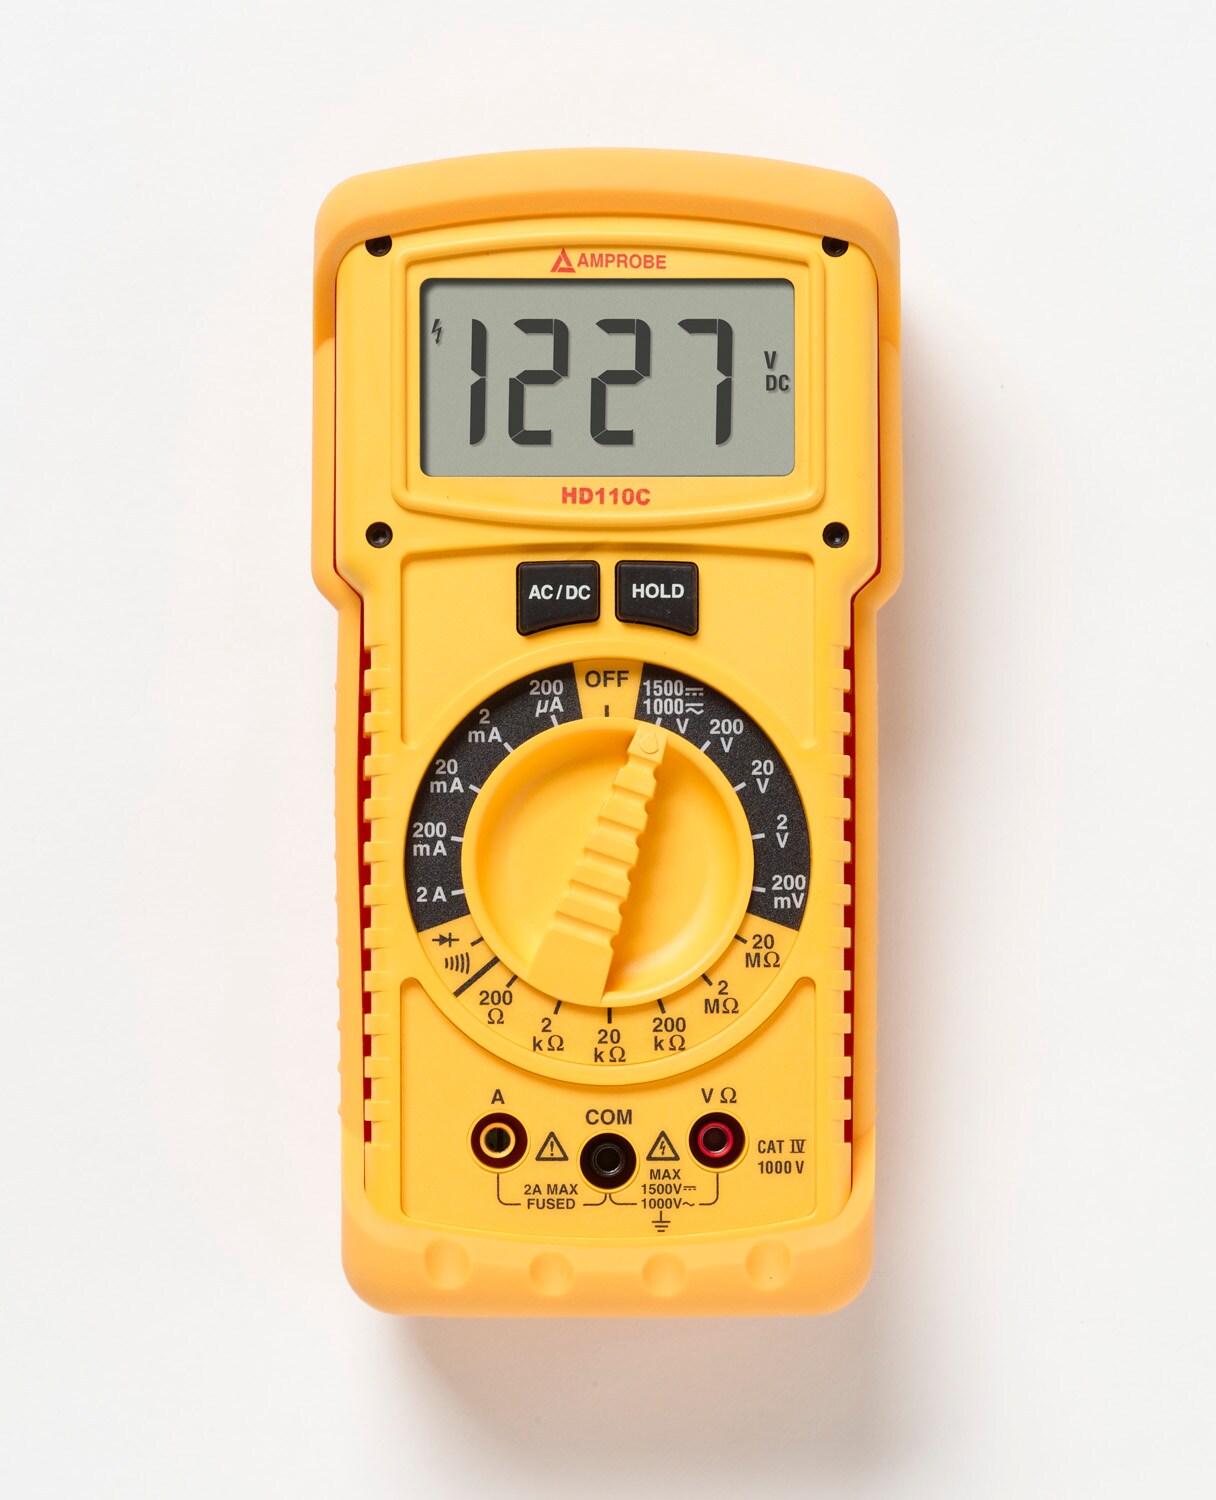 Digital Cat Iv Multimeter 1000-Volt in Yellow | - Amprobe HD110C